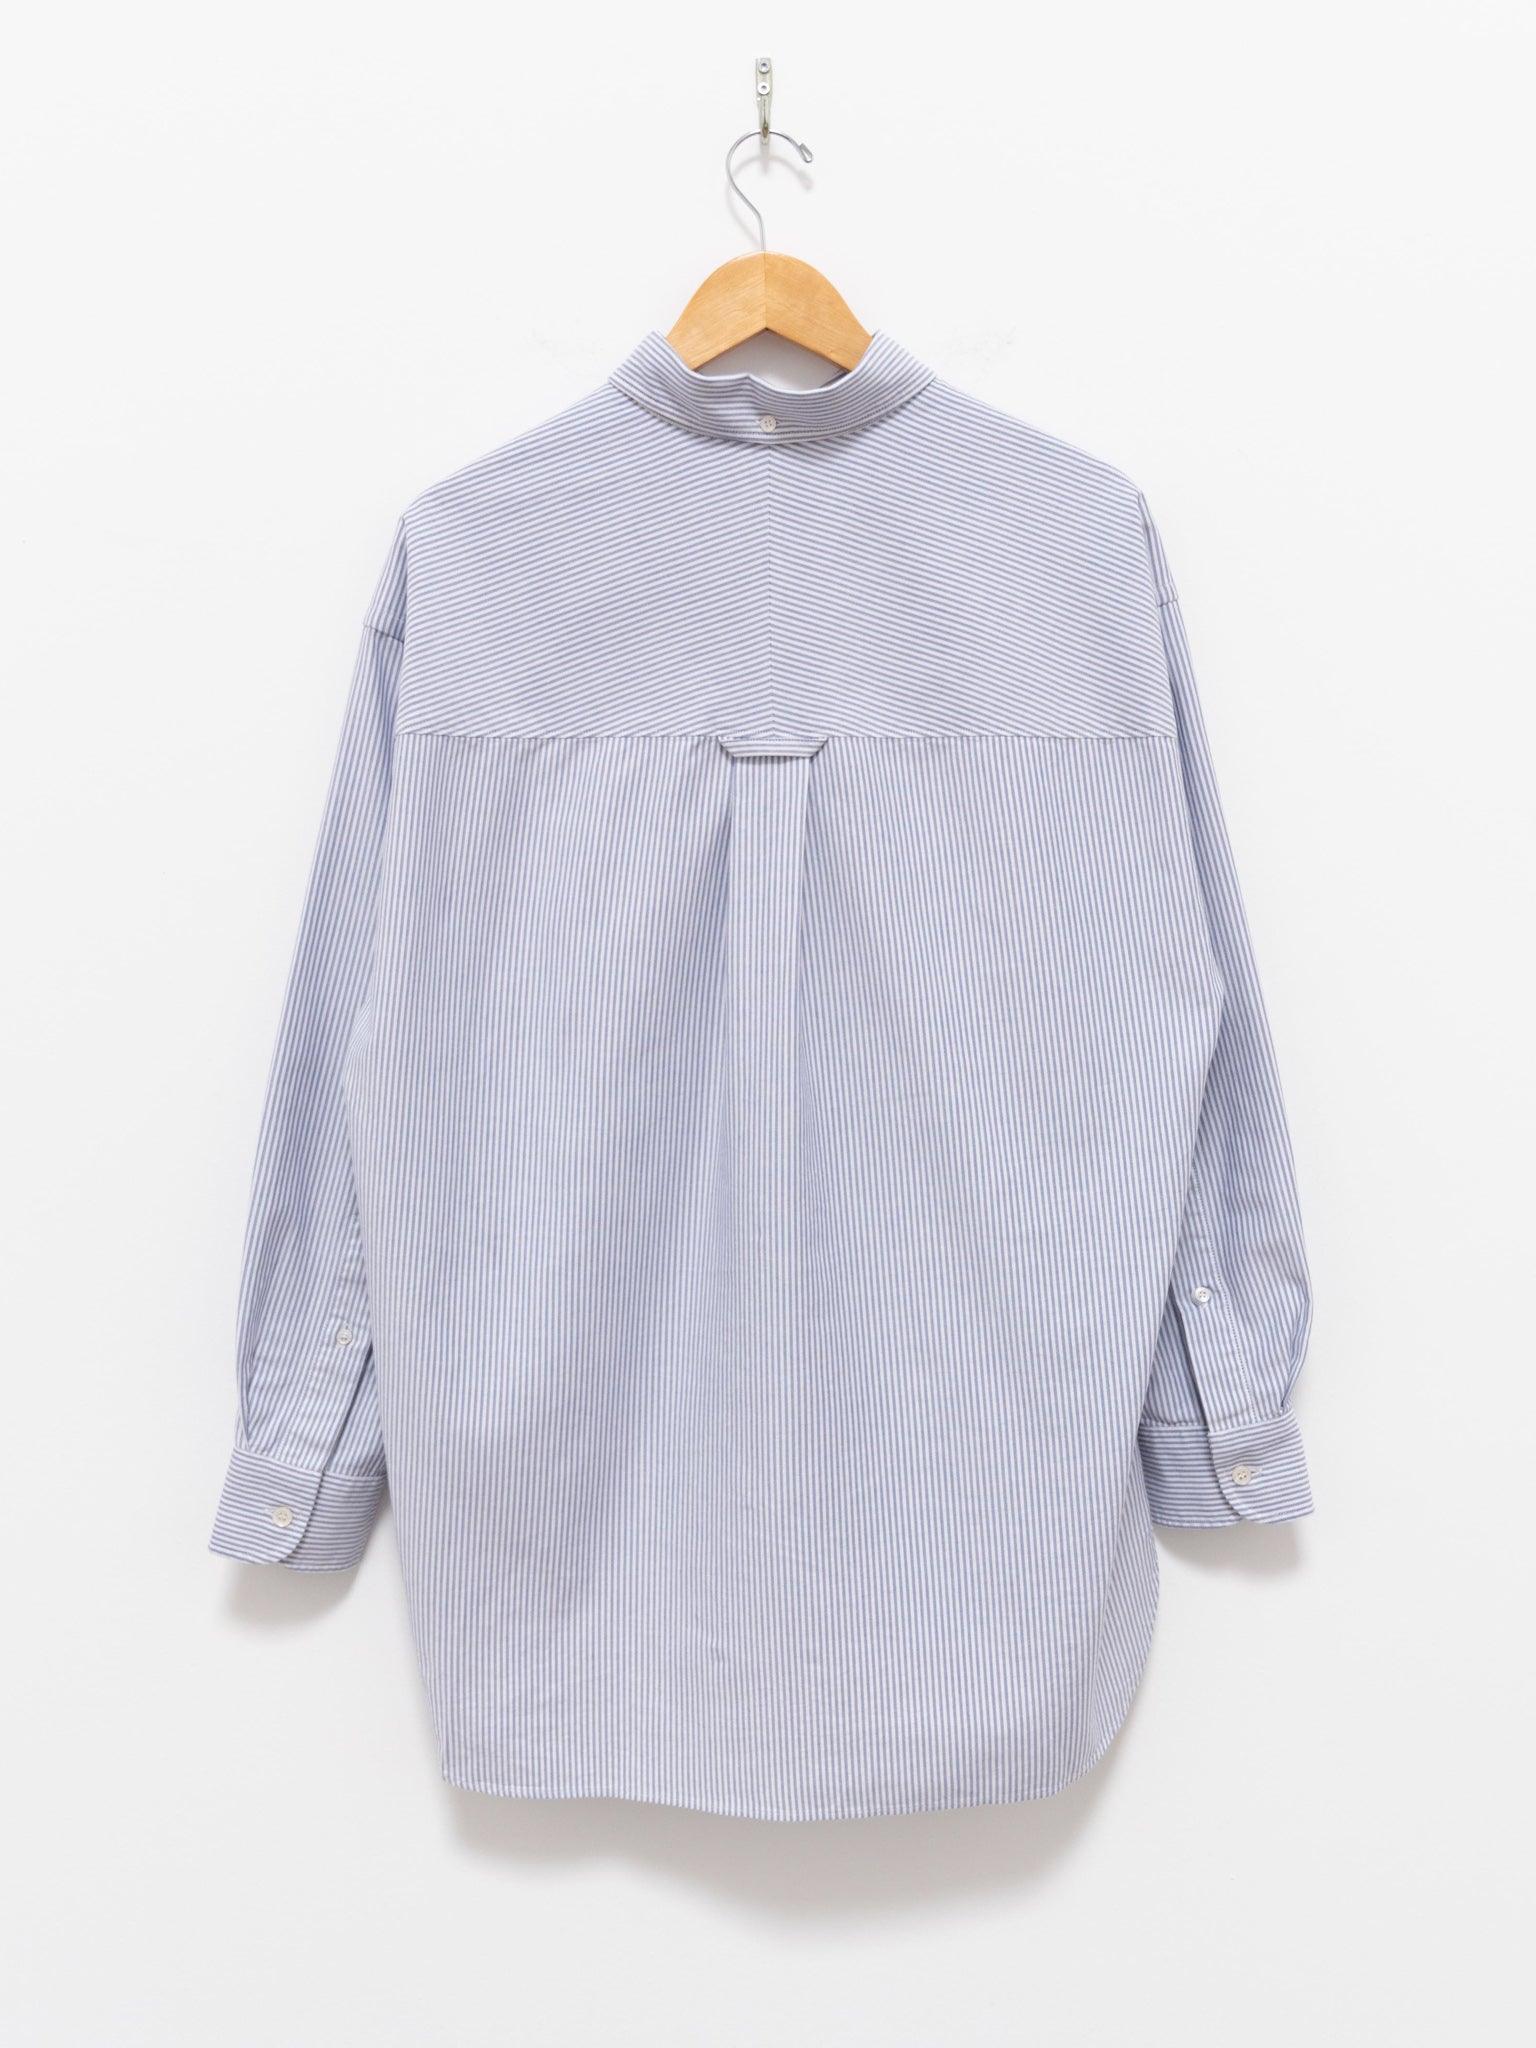 Namu Shop - Studio Nicholson Creed Oxford Shirt - Cornflower Stripe